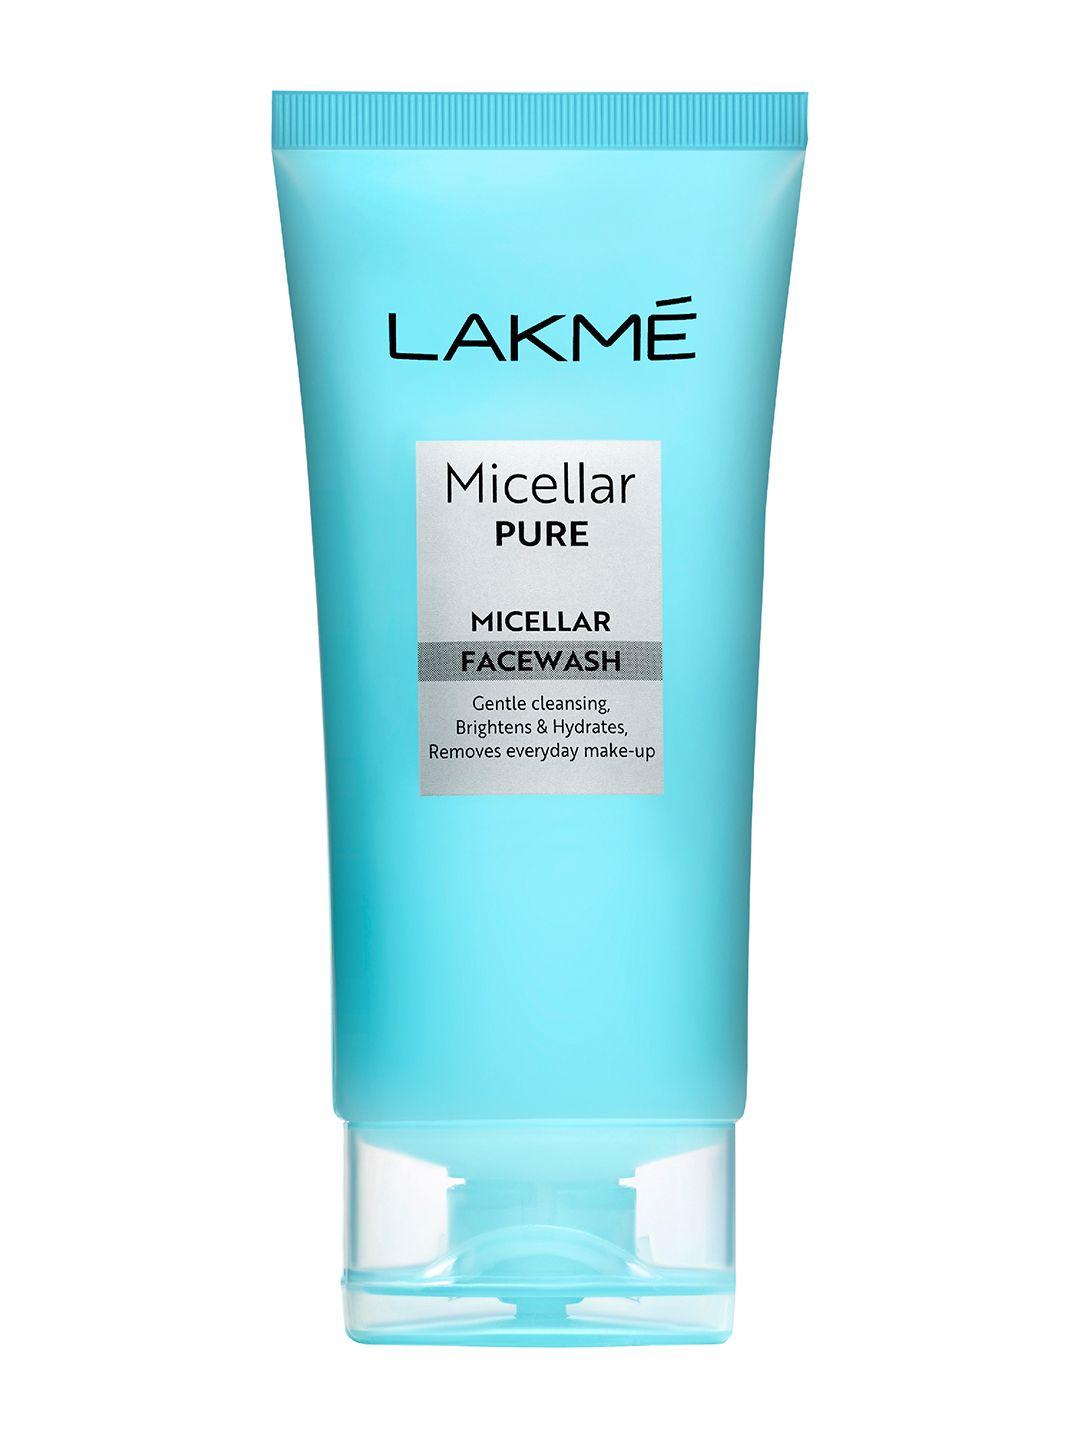 lakme micellar pure facewash for deep pore cleansing & hydration - 50g